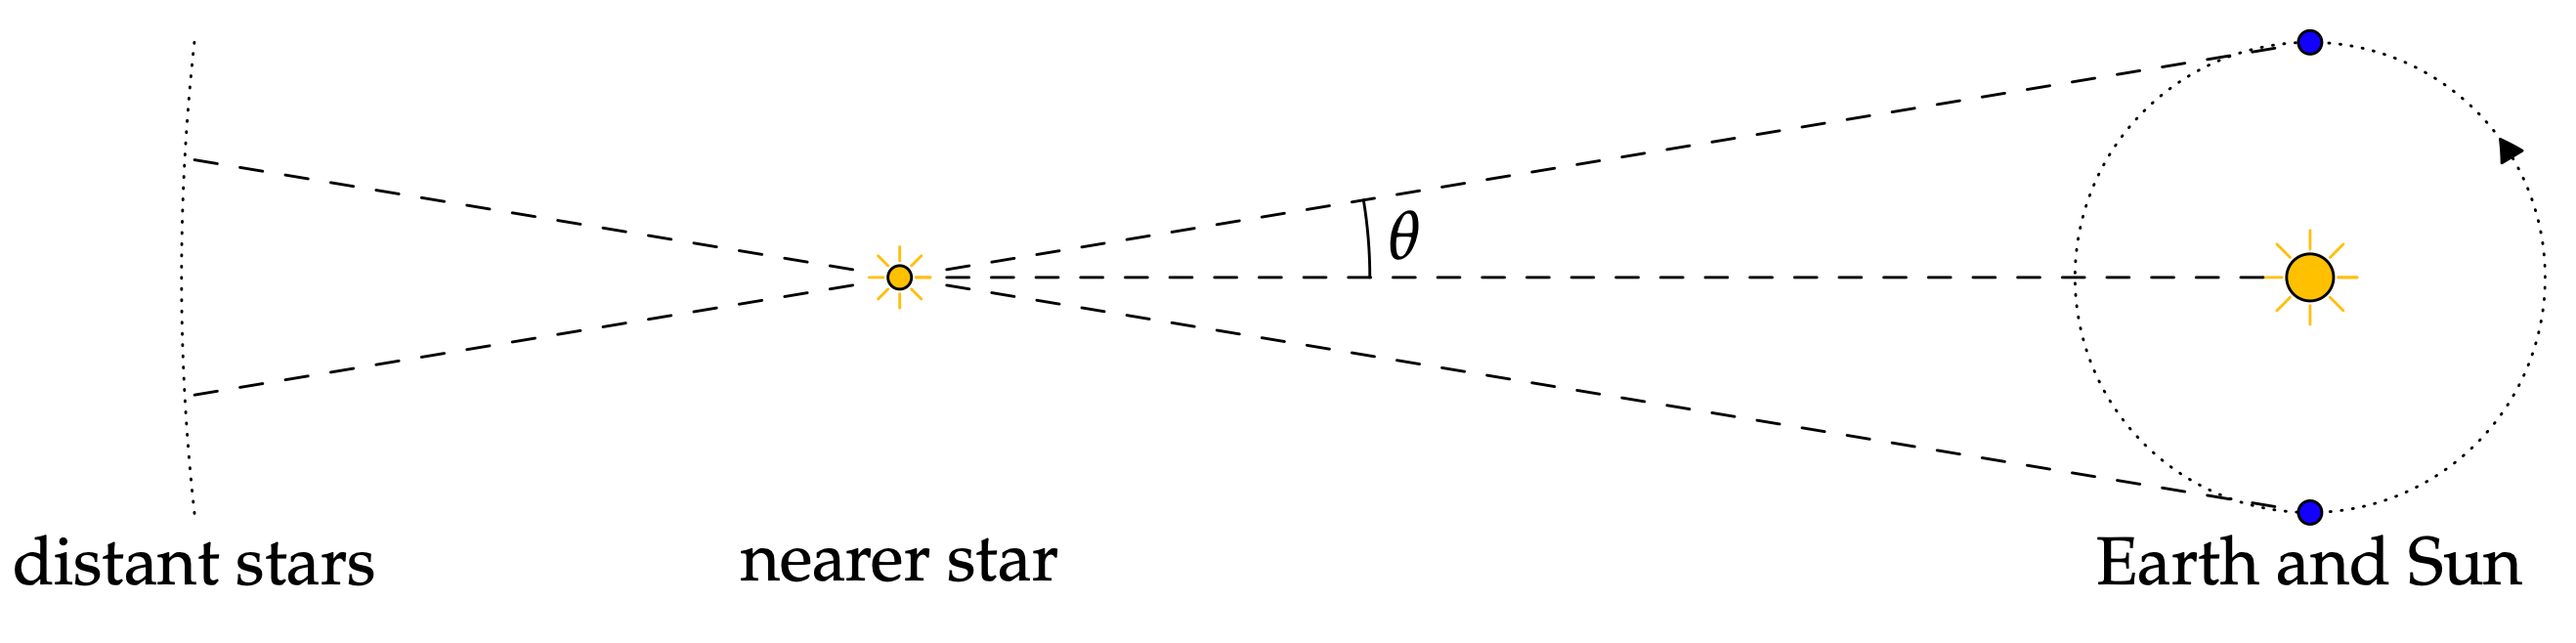 ejemplo de astronomía - imagen de www.math.uci.edu